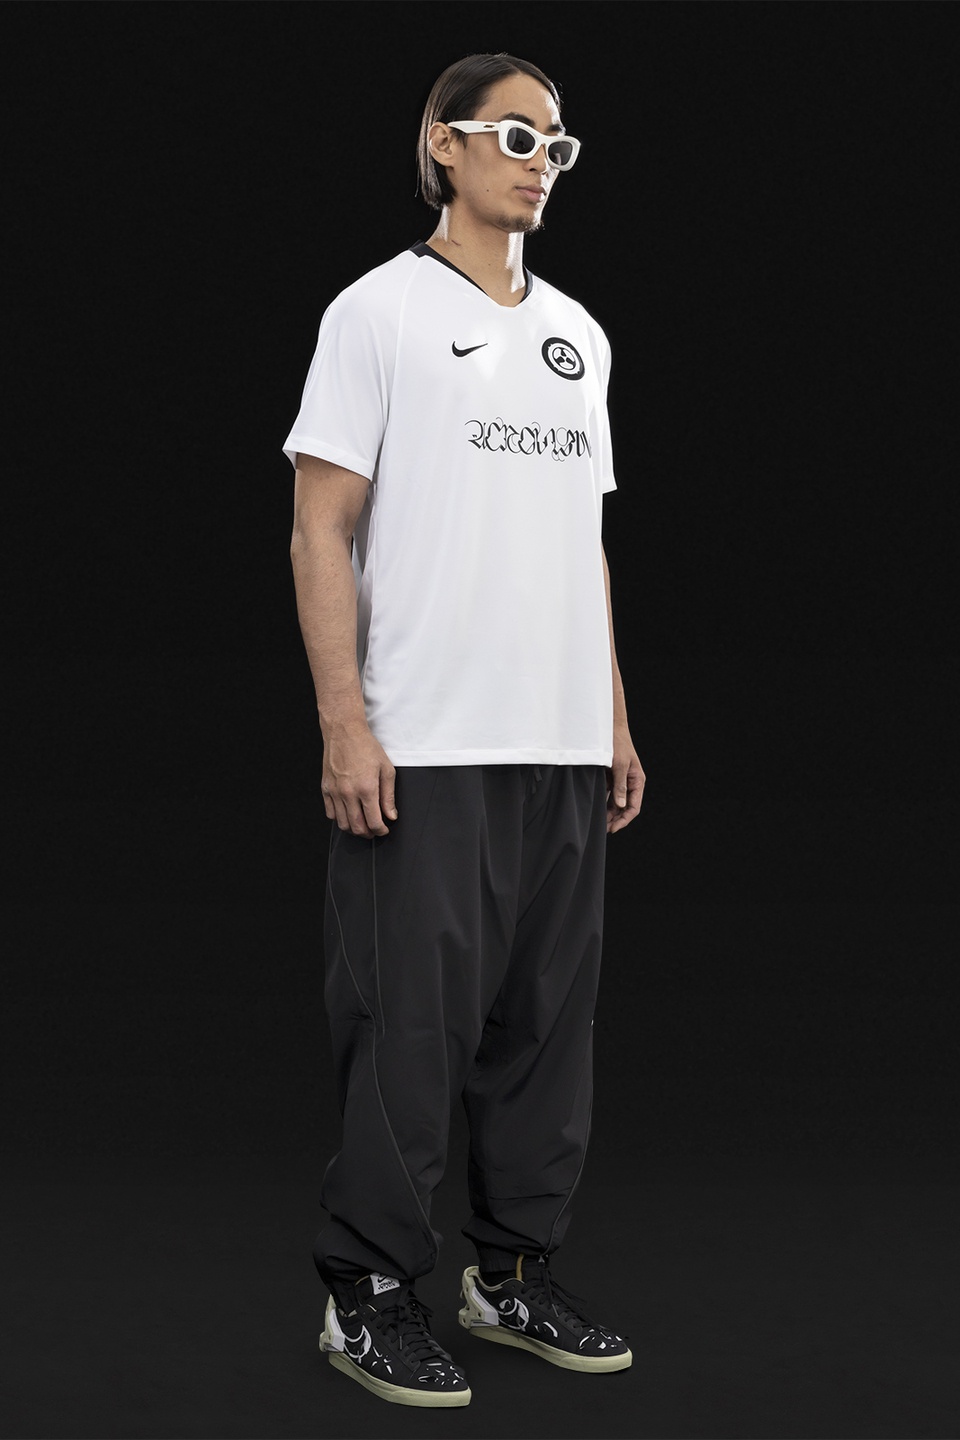 GGG-T1-100 Nike® Acronym® Stadium Jersey White/White - 2